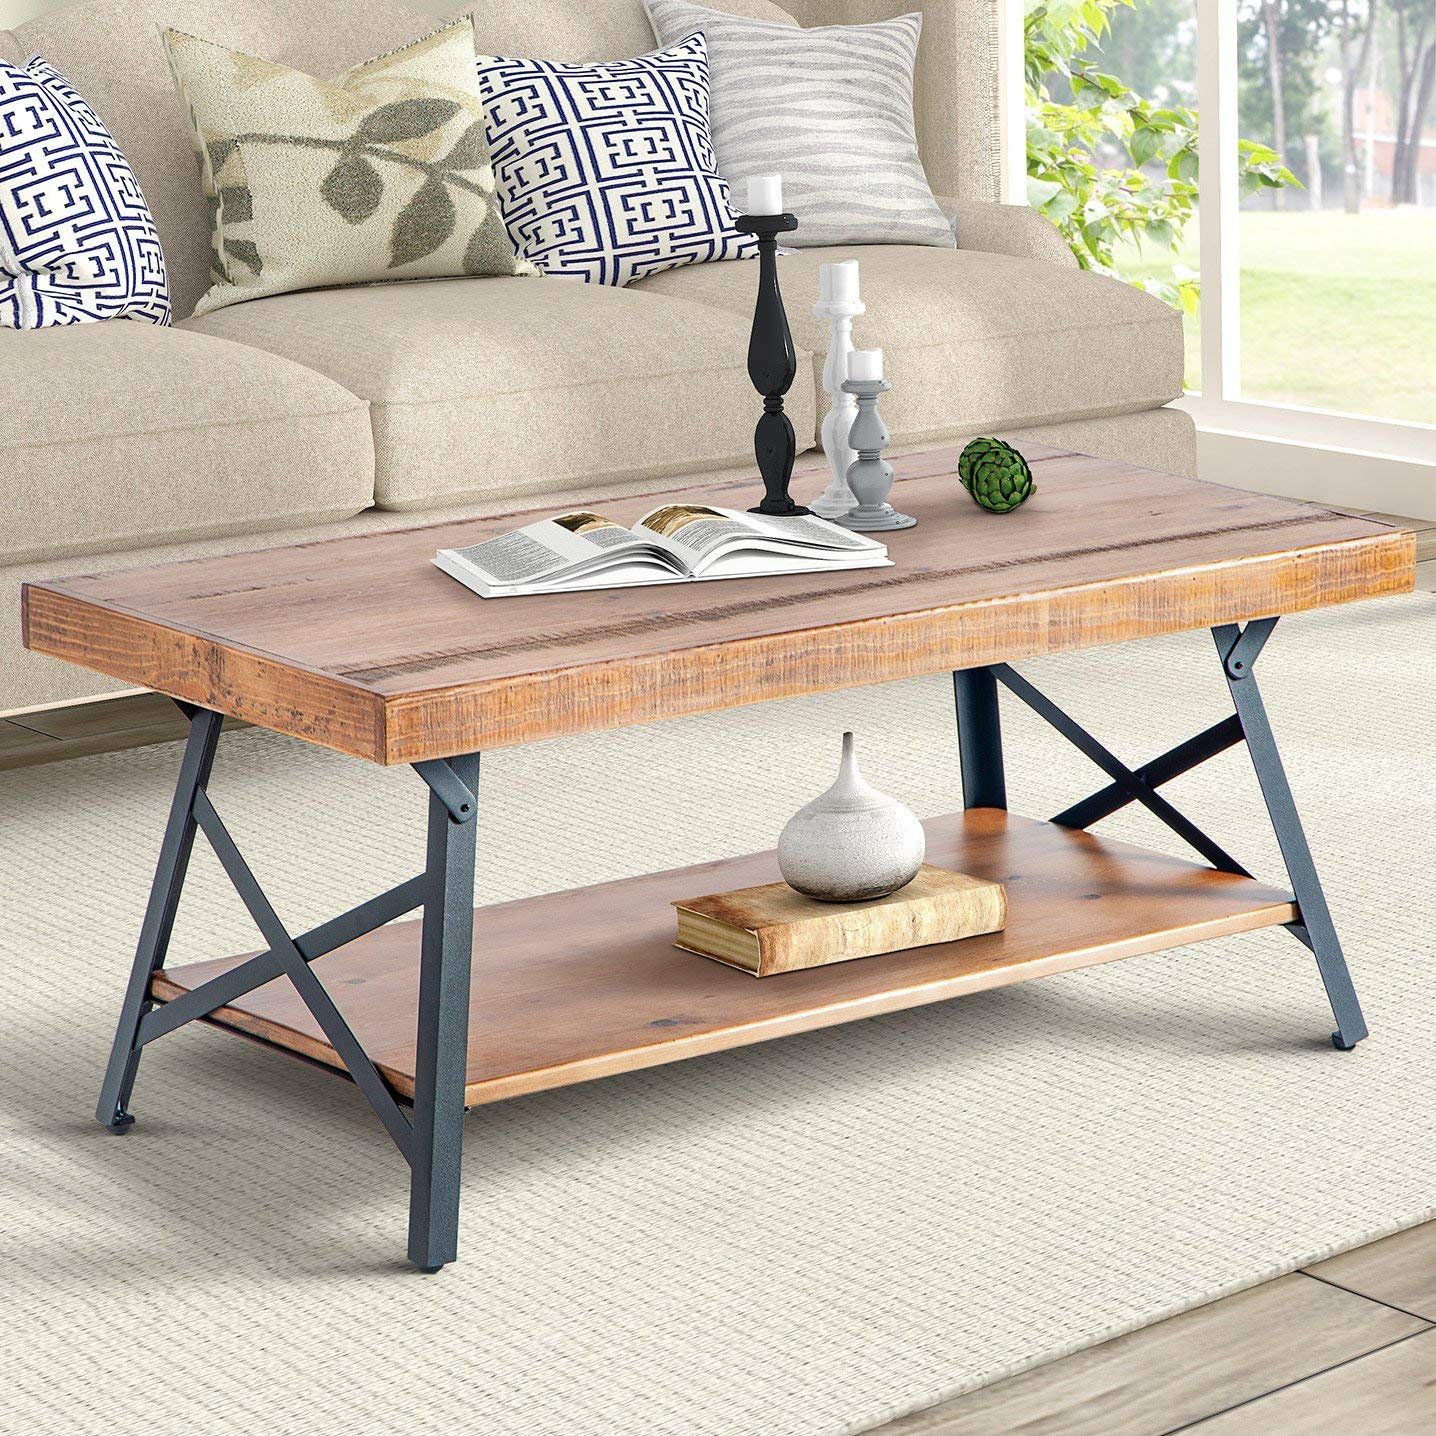 Rustic Brown Wood Coffee Table With Metal Legs | Buen Hogar Furniture Regarding Coffee Tables With Metal Legs (View 5 of 15)